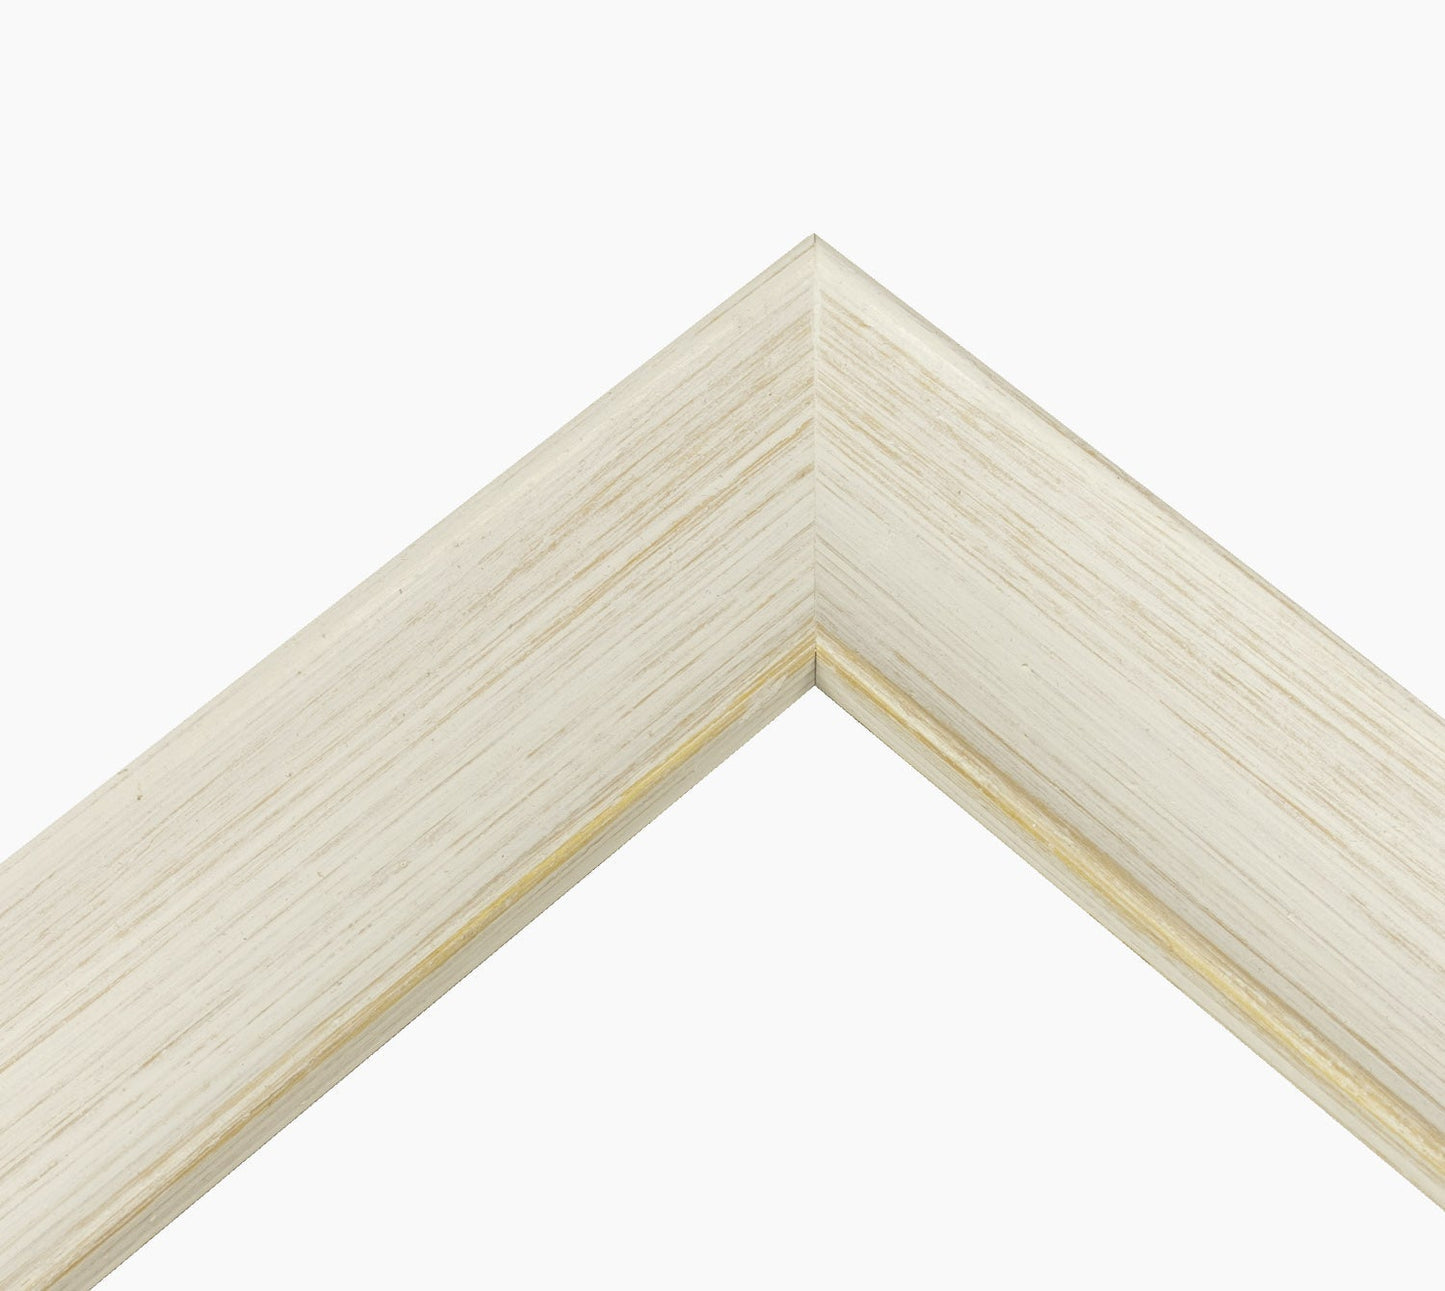 298.915 cadre en bois à fond ocre blanc mesure de profil 45x30 mm Lombarda cornici S.n.c.